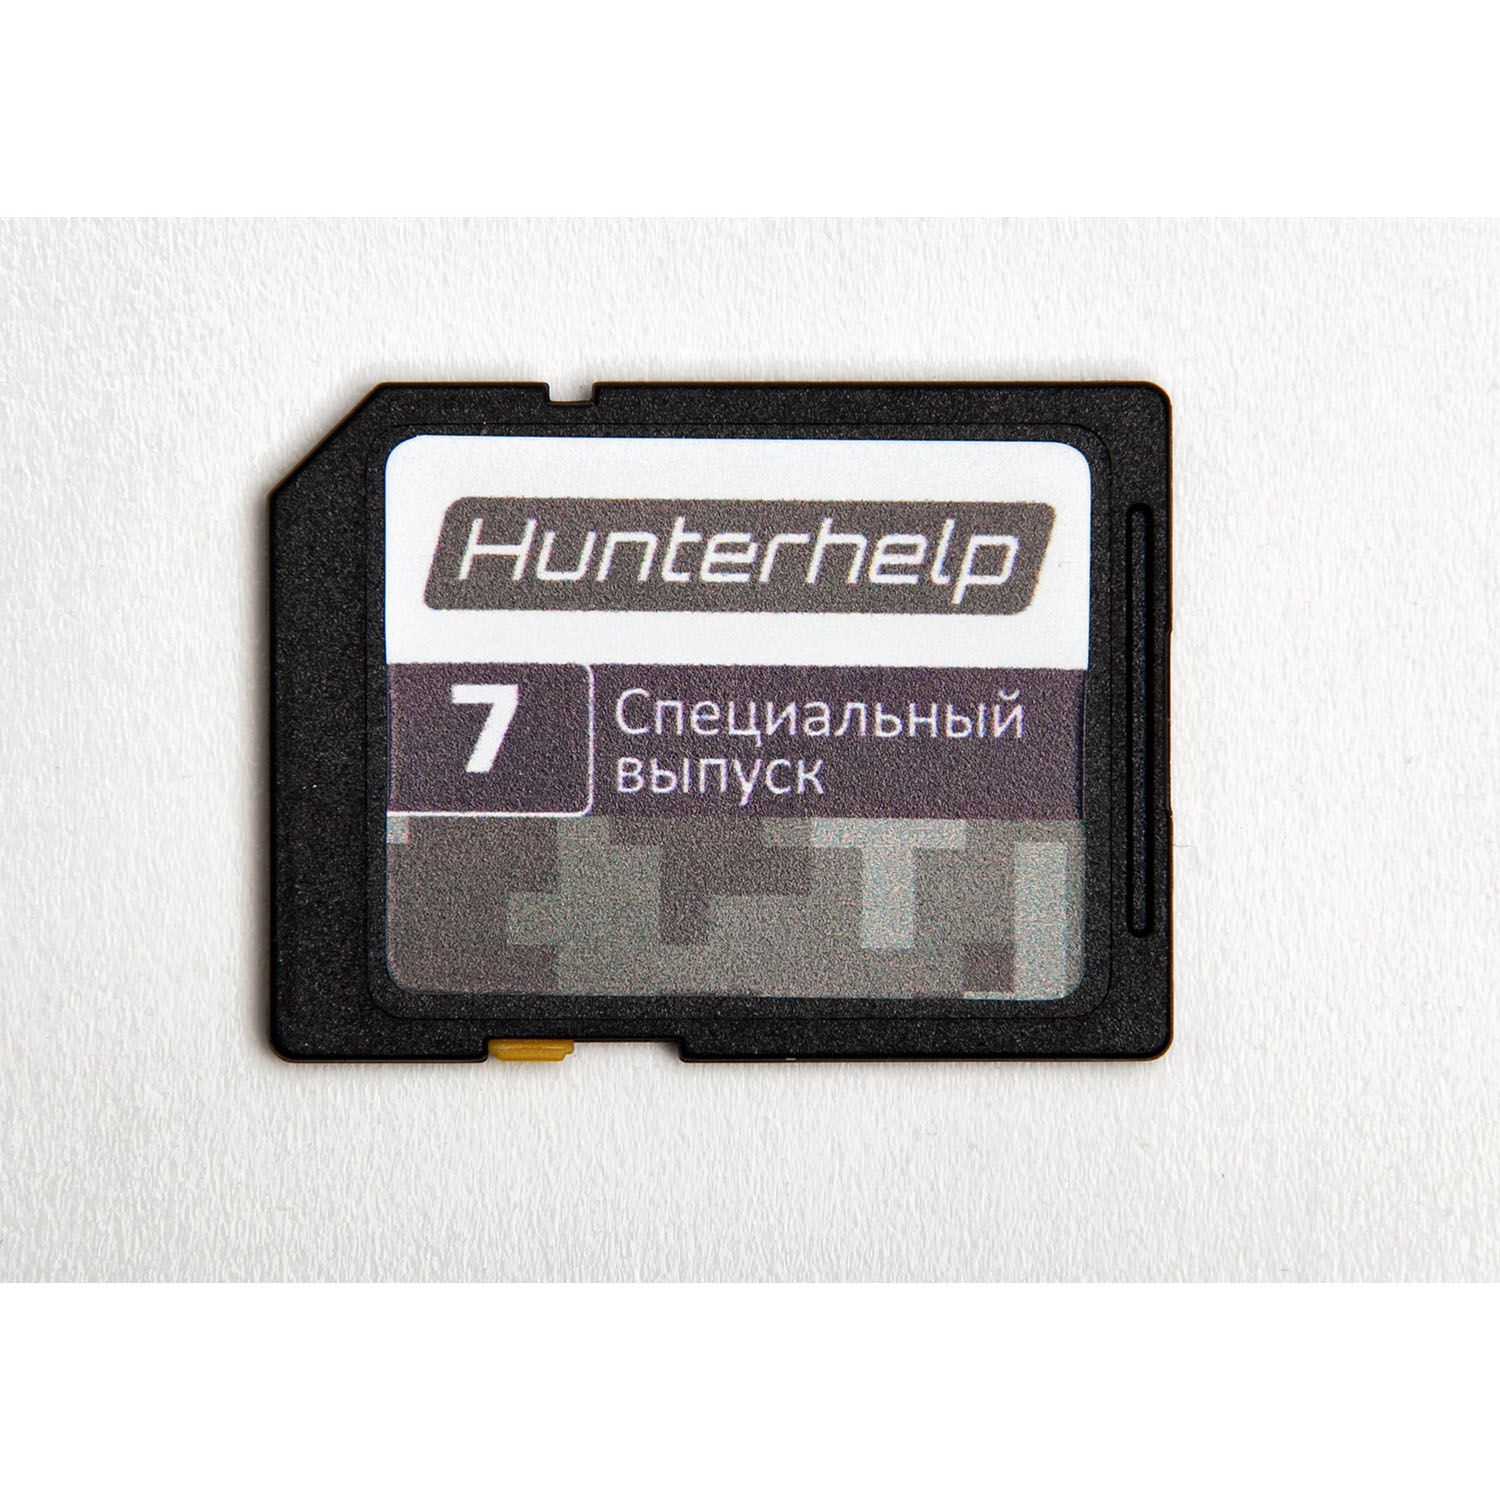 Электроманок Hunterhelp Standart-3M, фонотека 7, без динамика